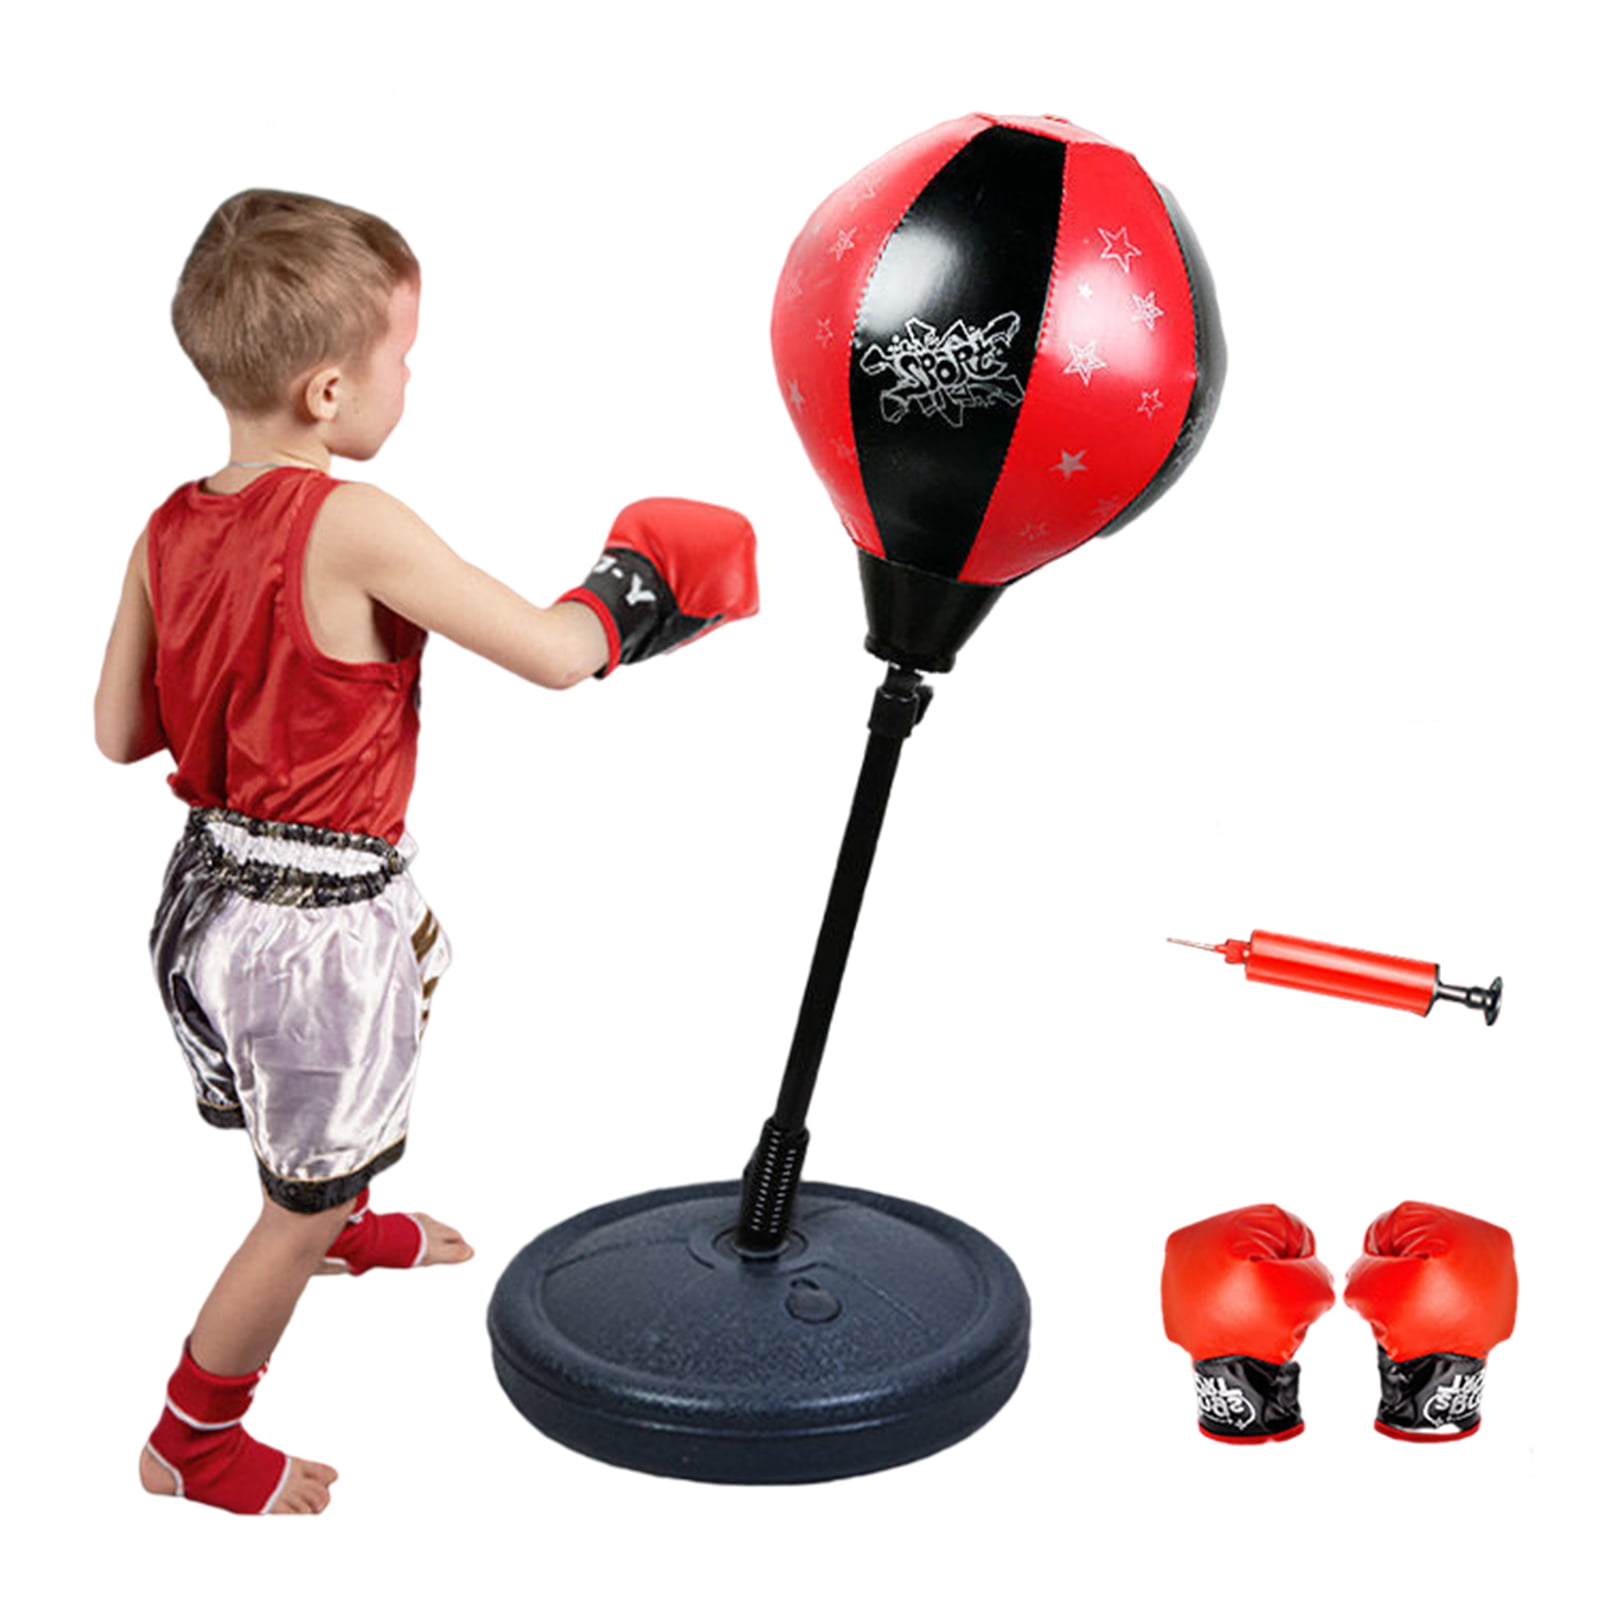 Spiderman Boxing Set Kids Punch Bag Gloves Punching Training Exercise Toy Gift 